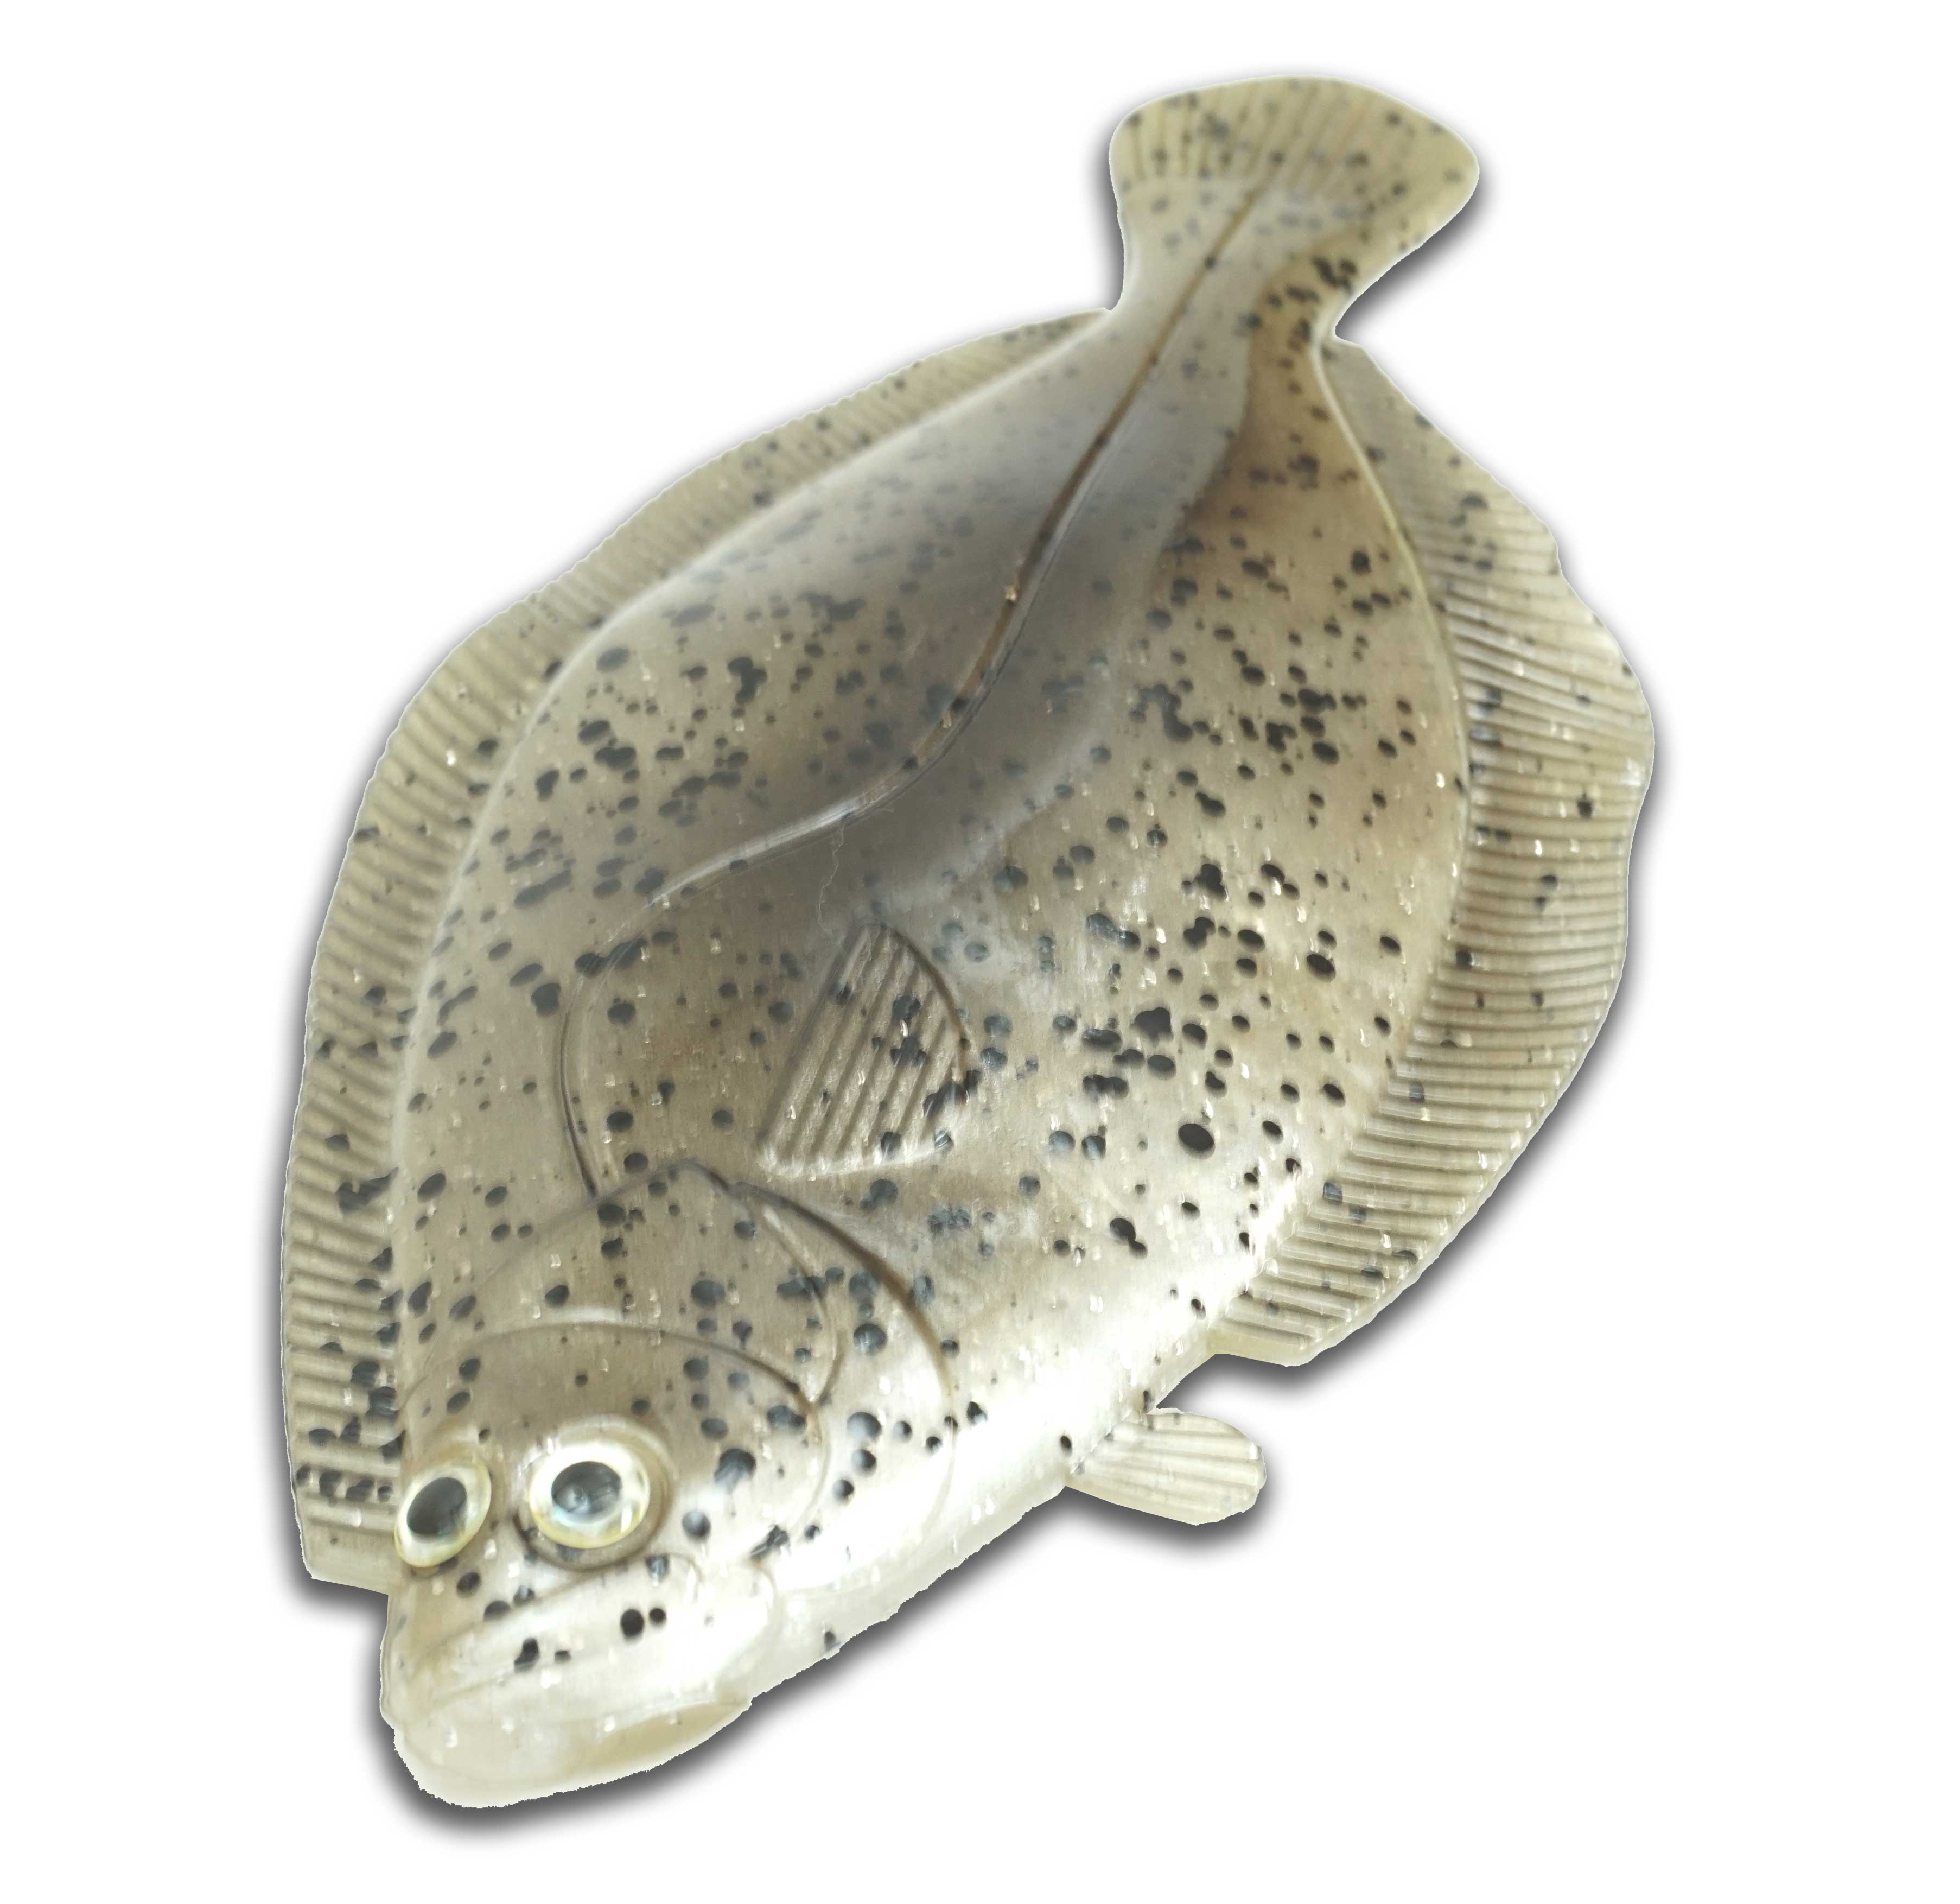 Artificial Flounder 8 Light Tan/Speckled - Almost Alive Lures